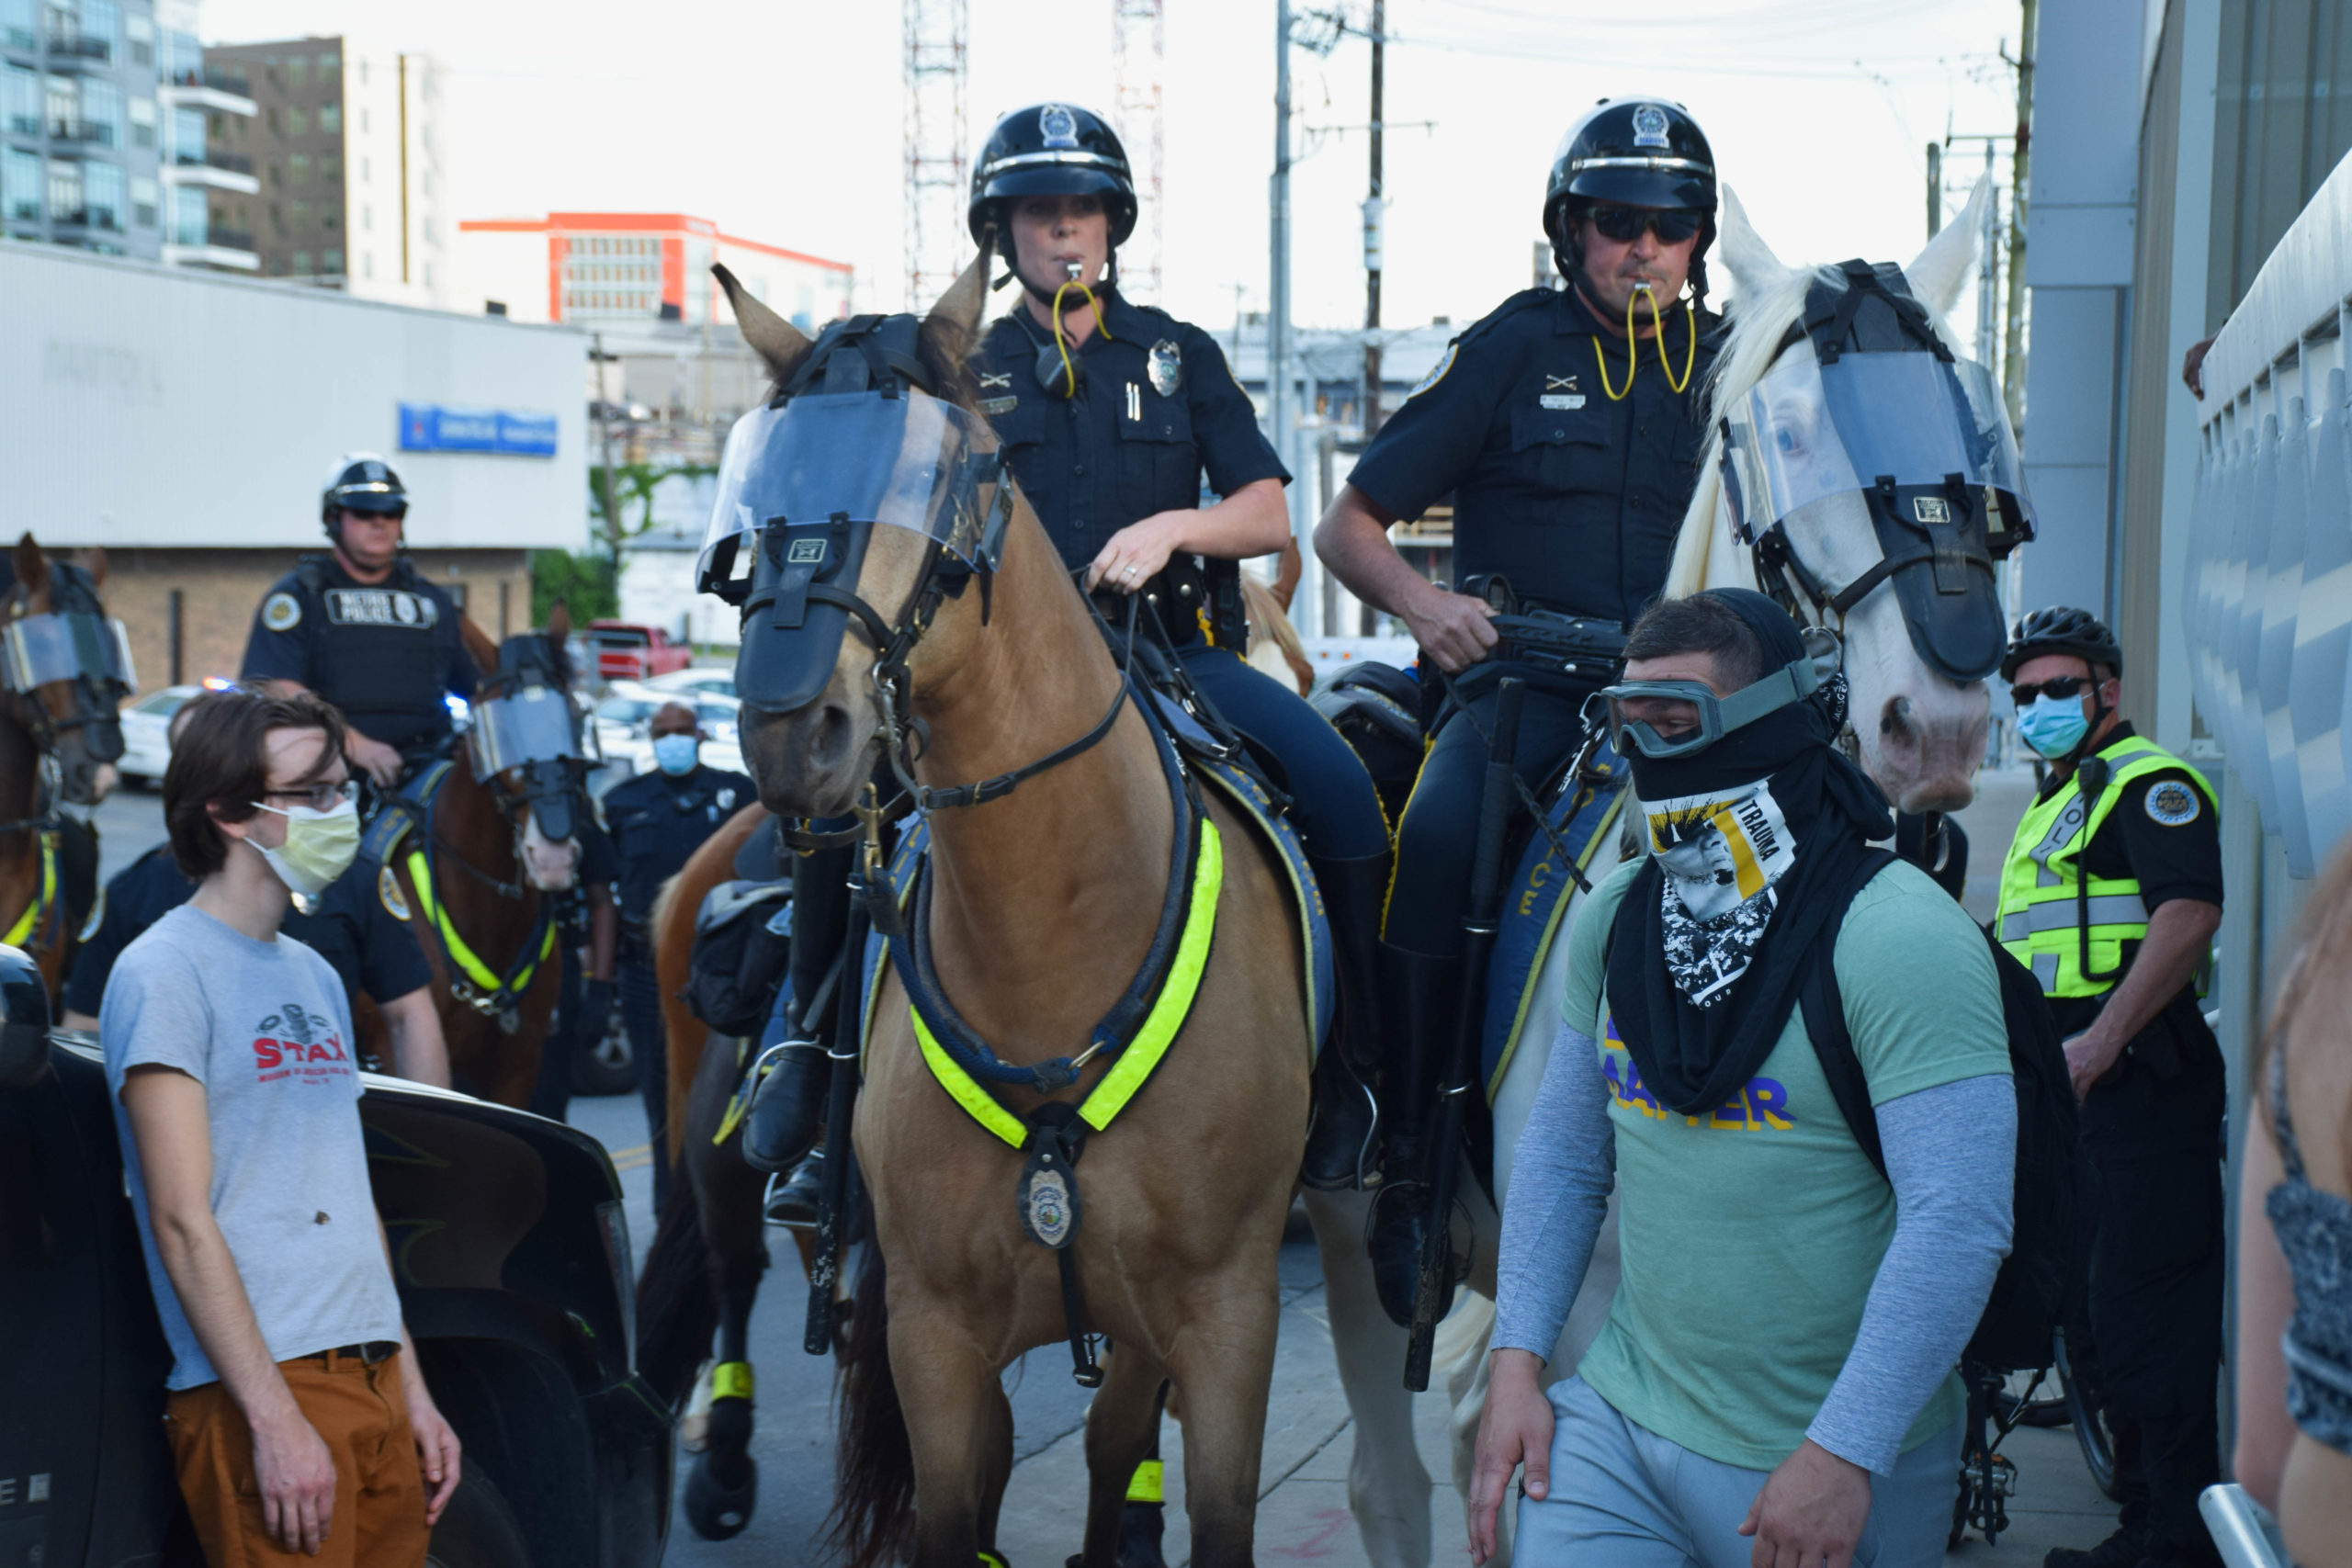 Nashville police horseback